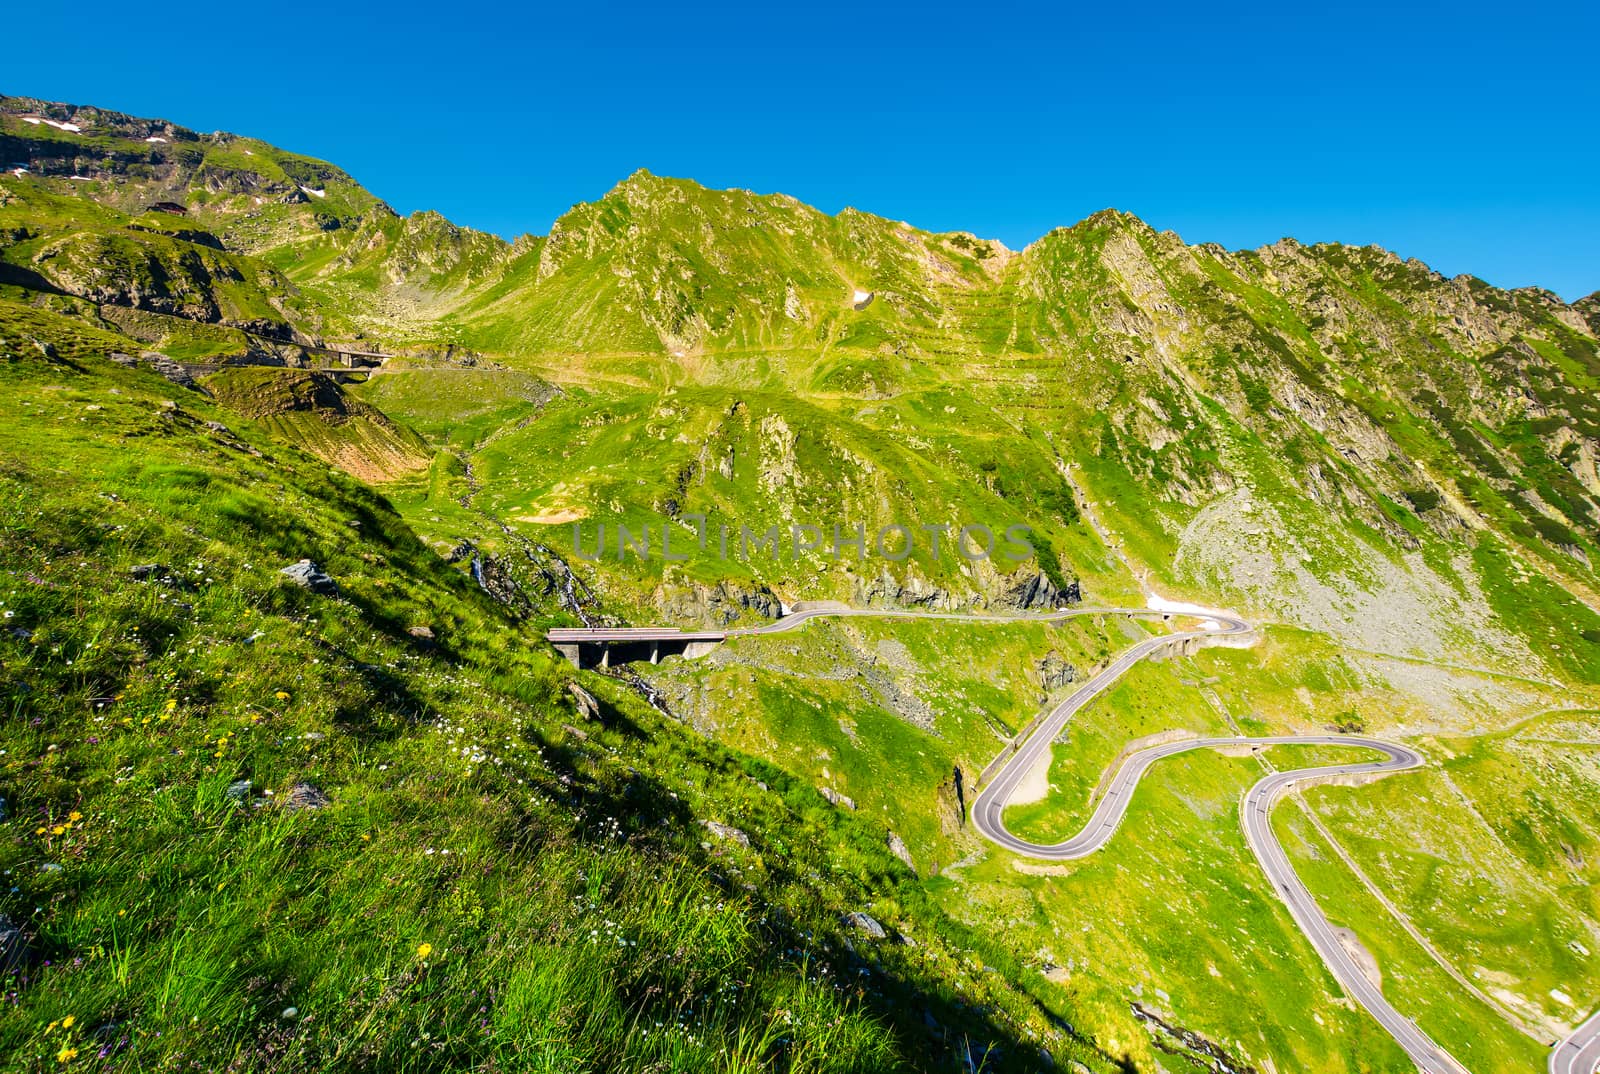 Transfagarasan road serpentine in the valley by Pellinni